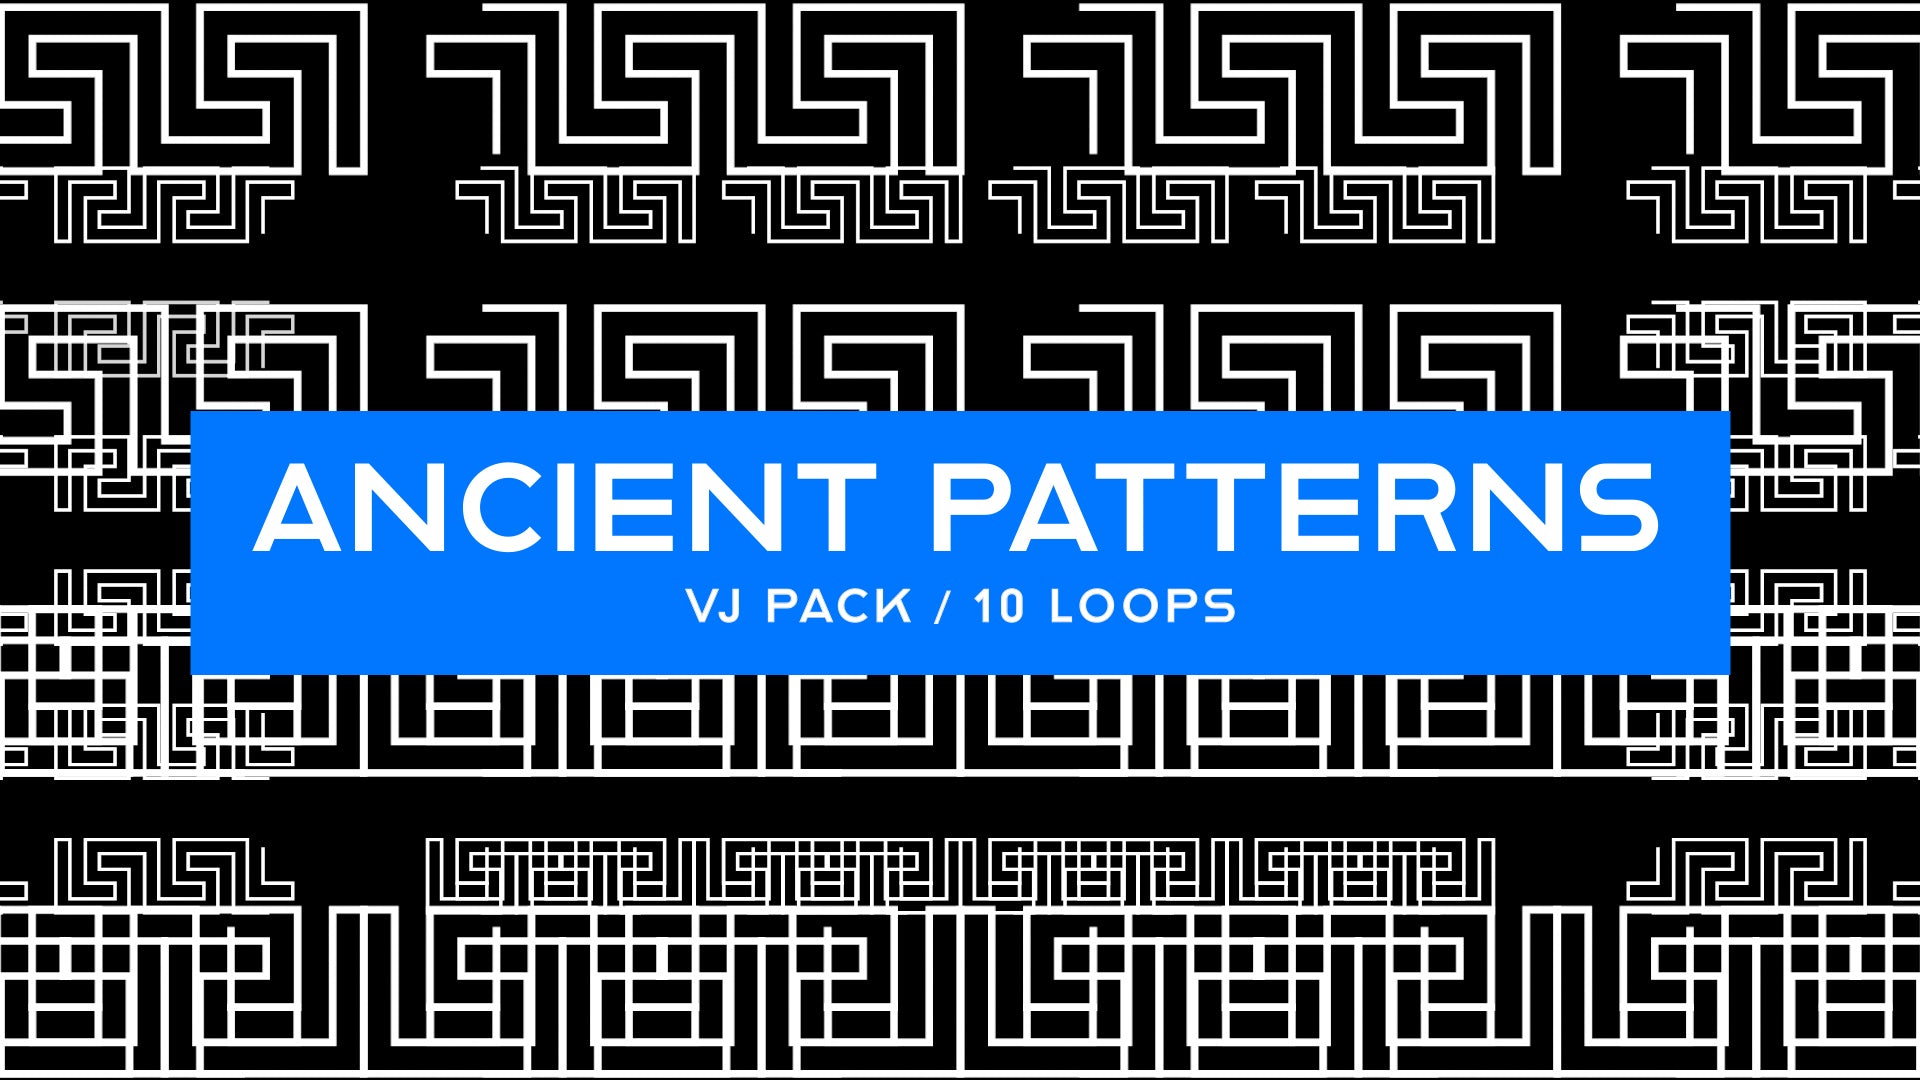 Triplewide Ancient Patterns Visuals